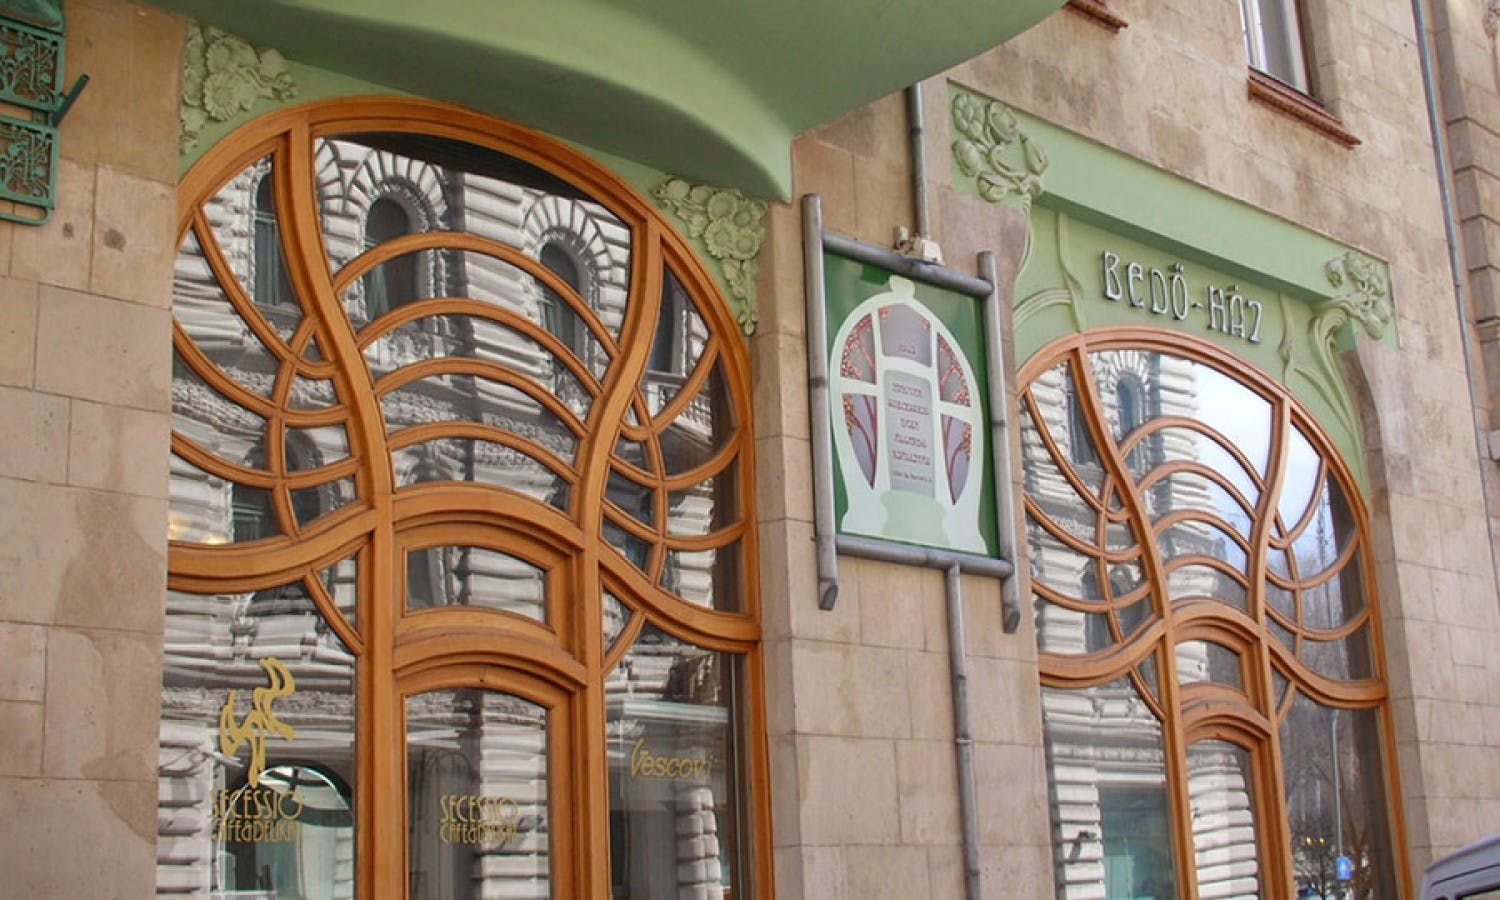 Budapest’s Art Nouveau – 3 hour walk with a historian